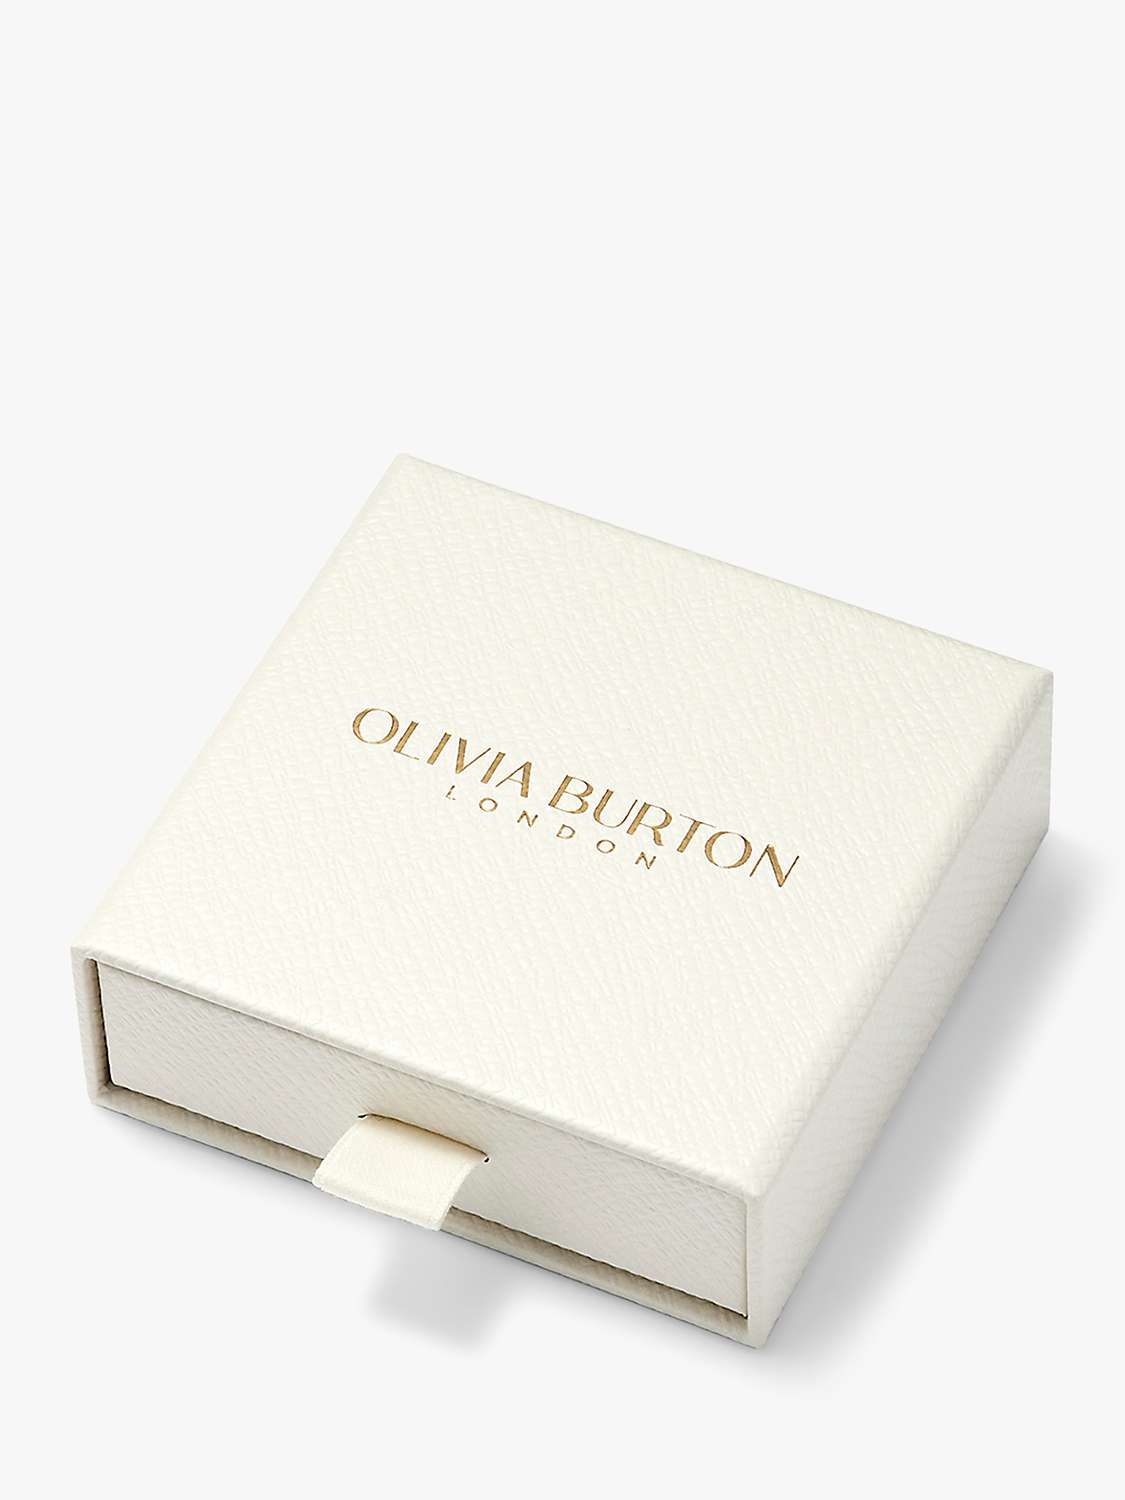 Buy Olivia Burton Knot Heart Bracelet, Silver Online at johnlewis.com